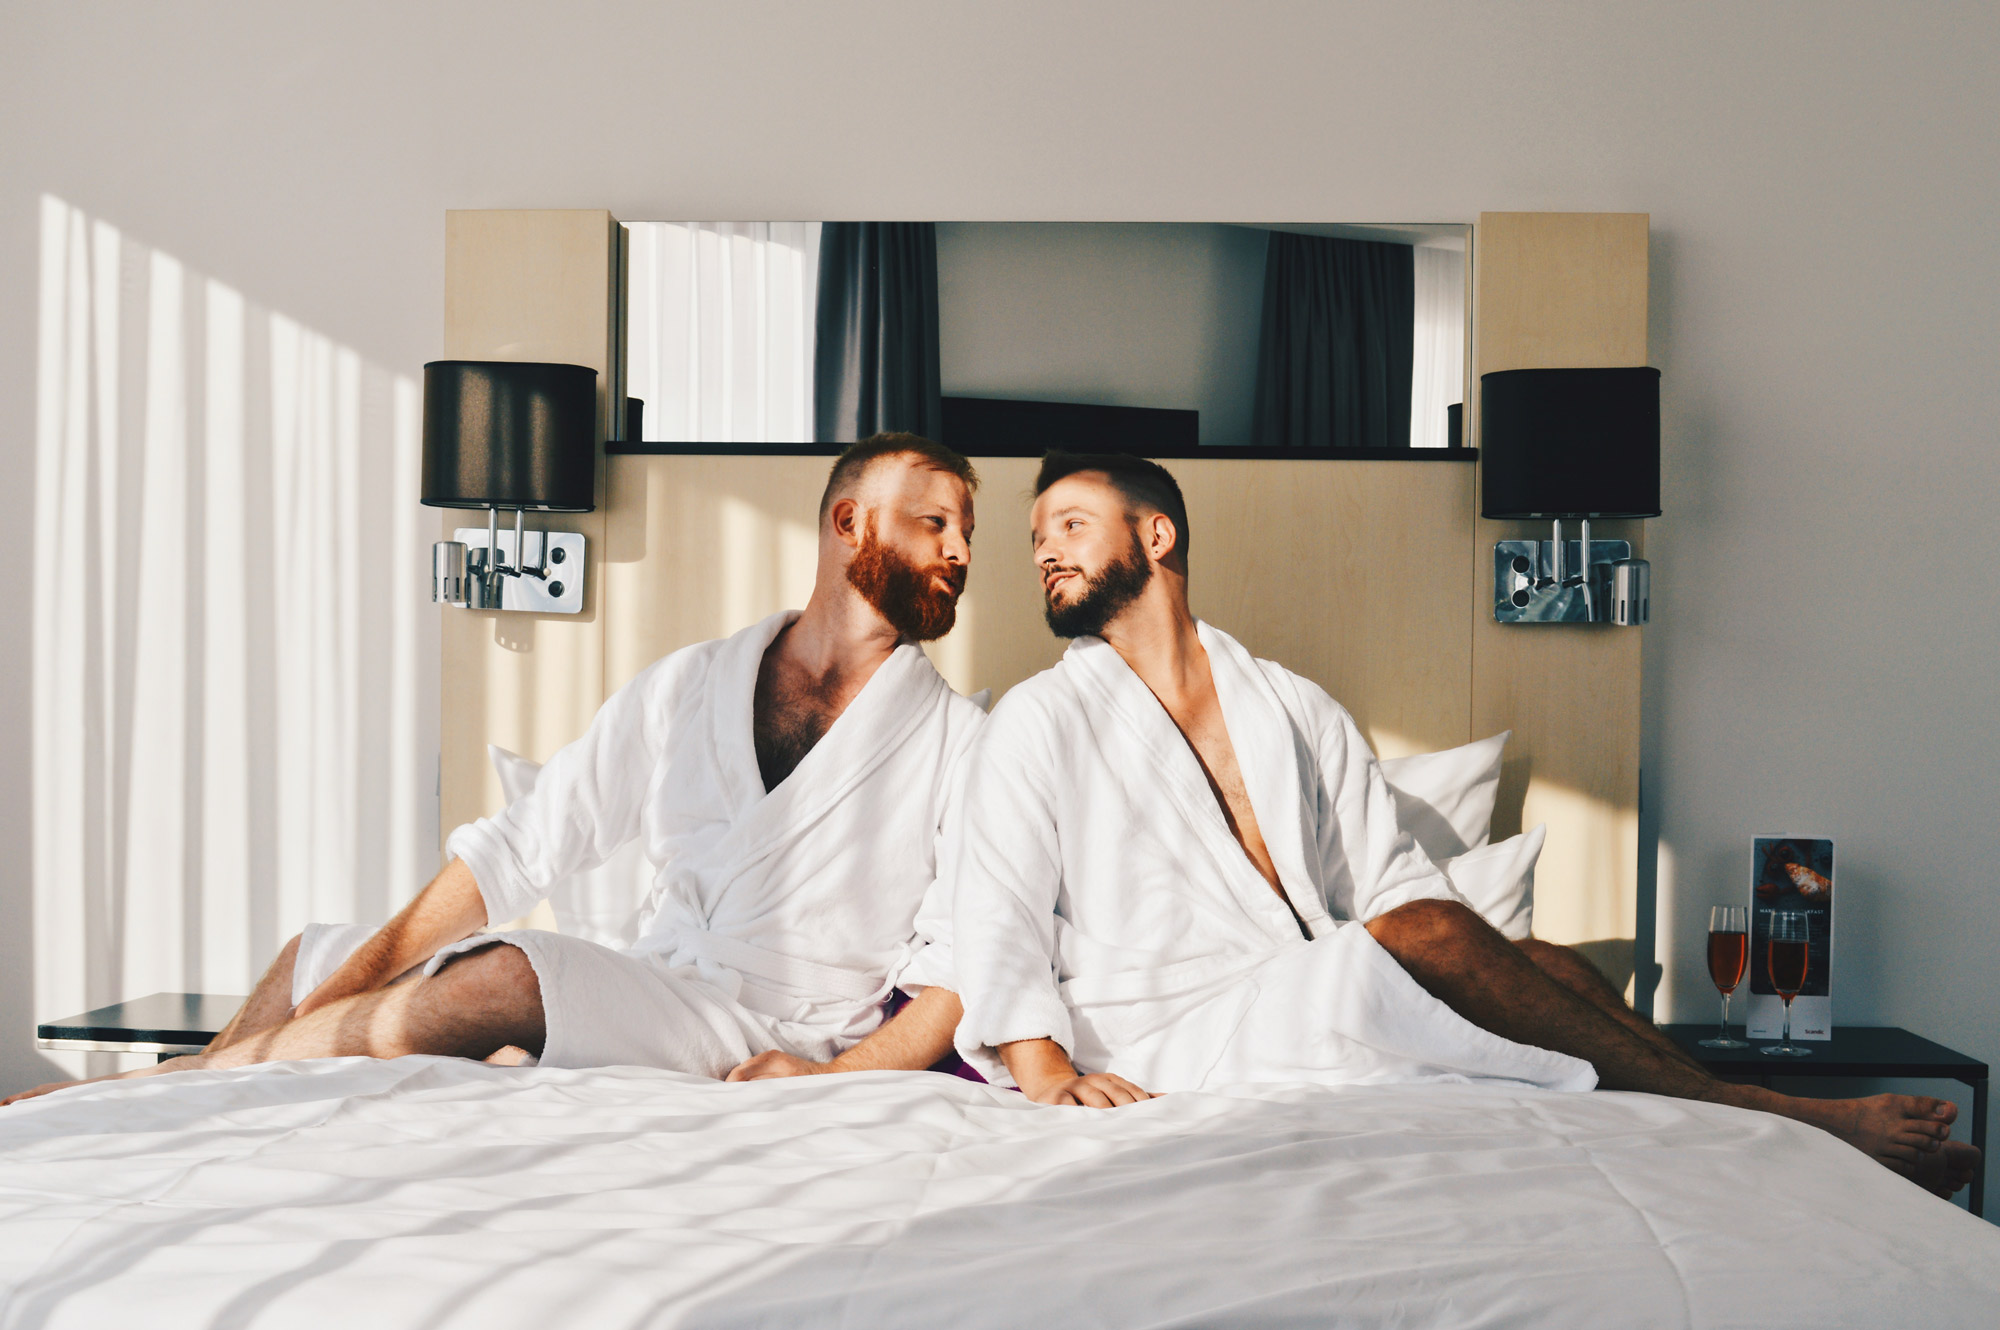 Scandic Berlin Kurfürstendamm Hotel: Our Gay Couple Hotel Review